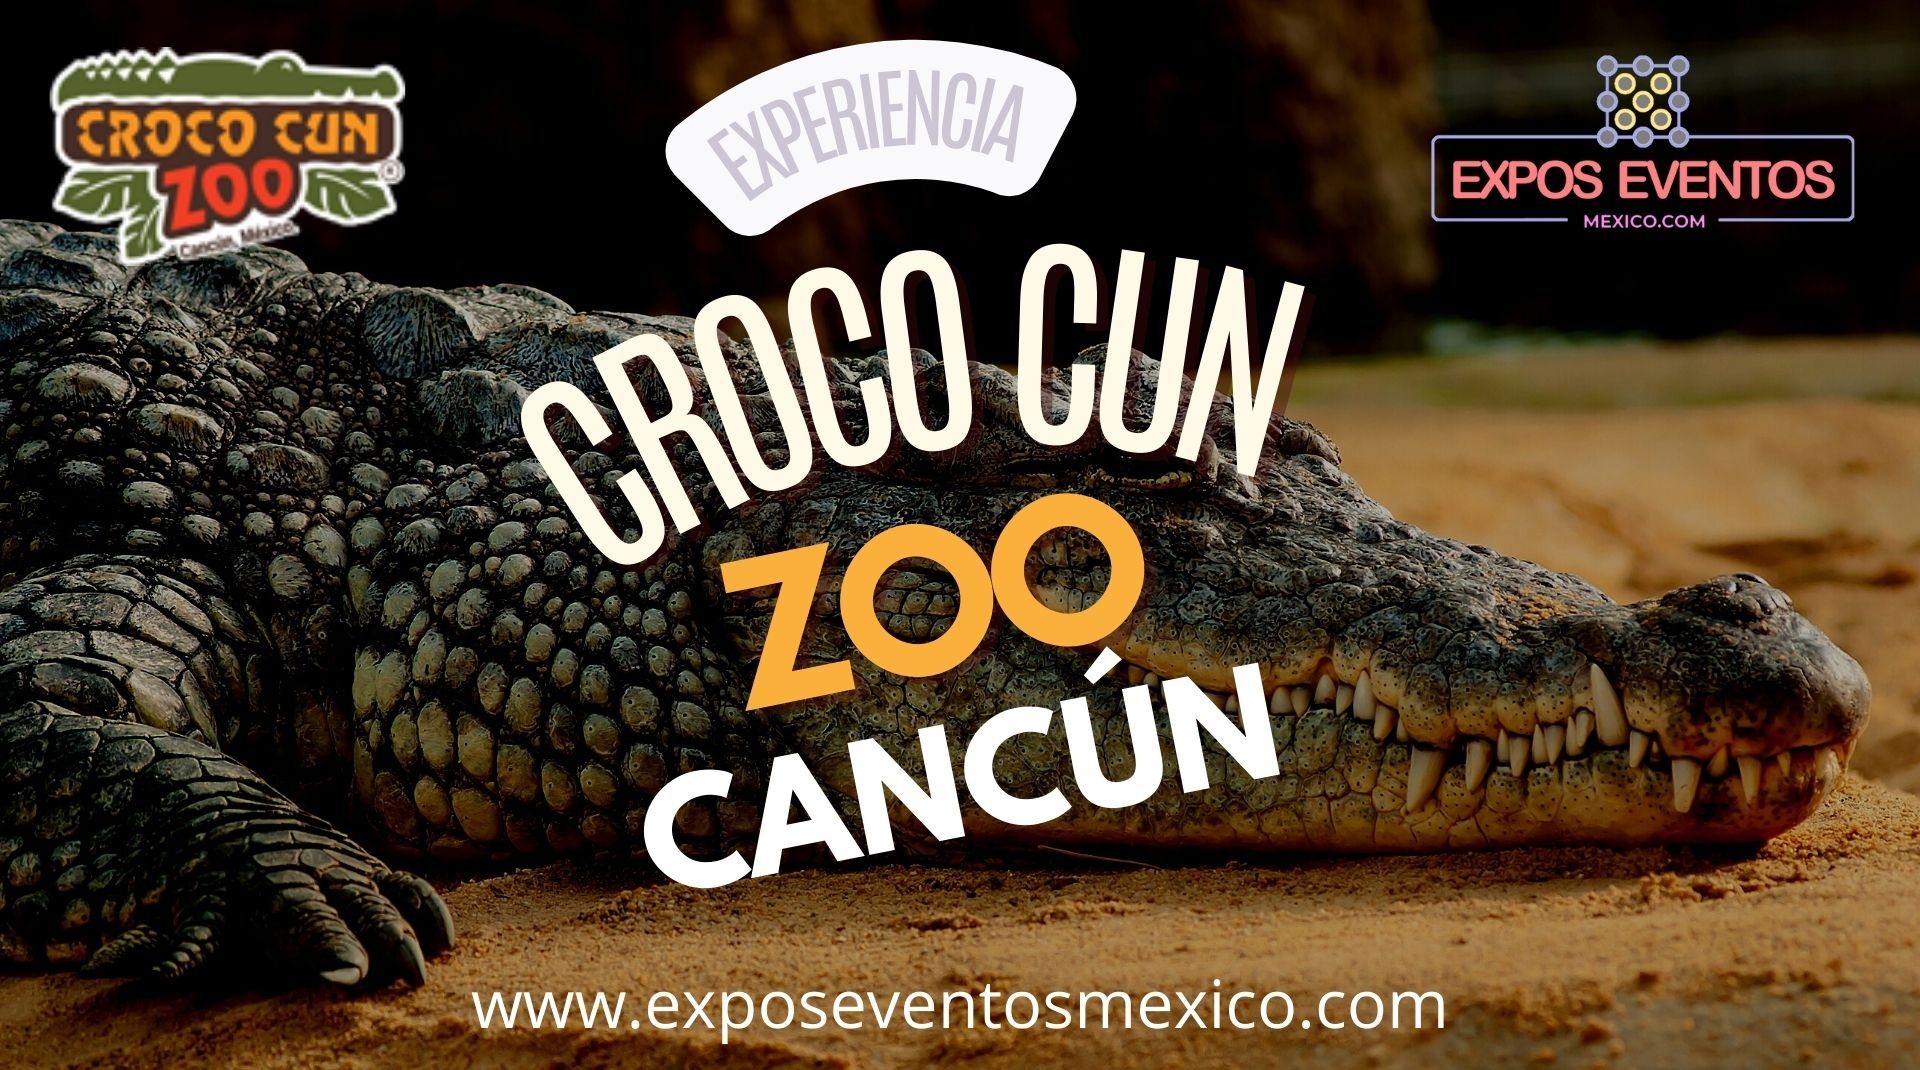 Croco Cun Zoo Cancún